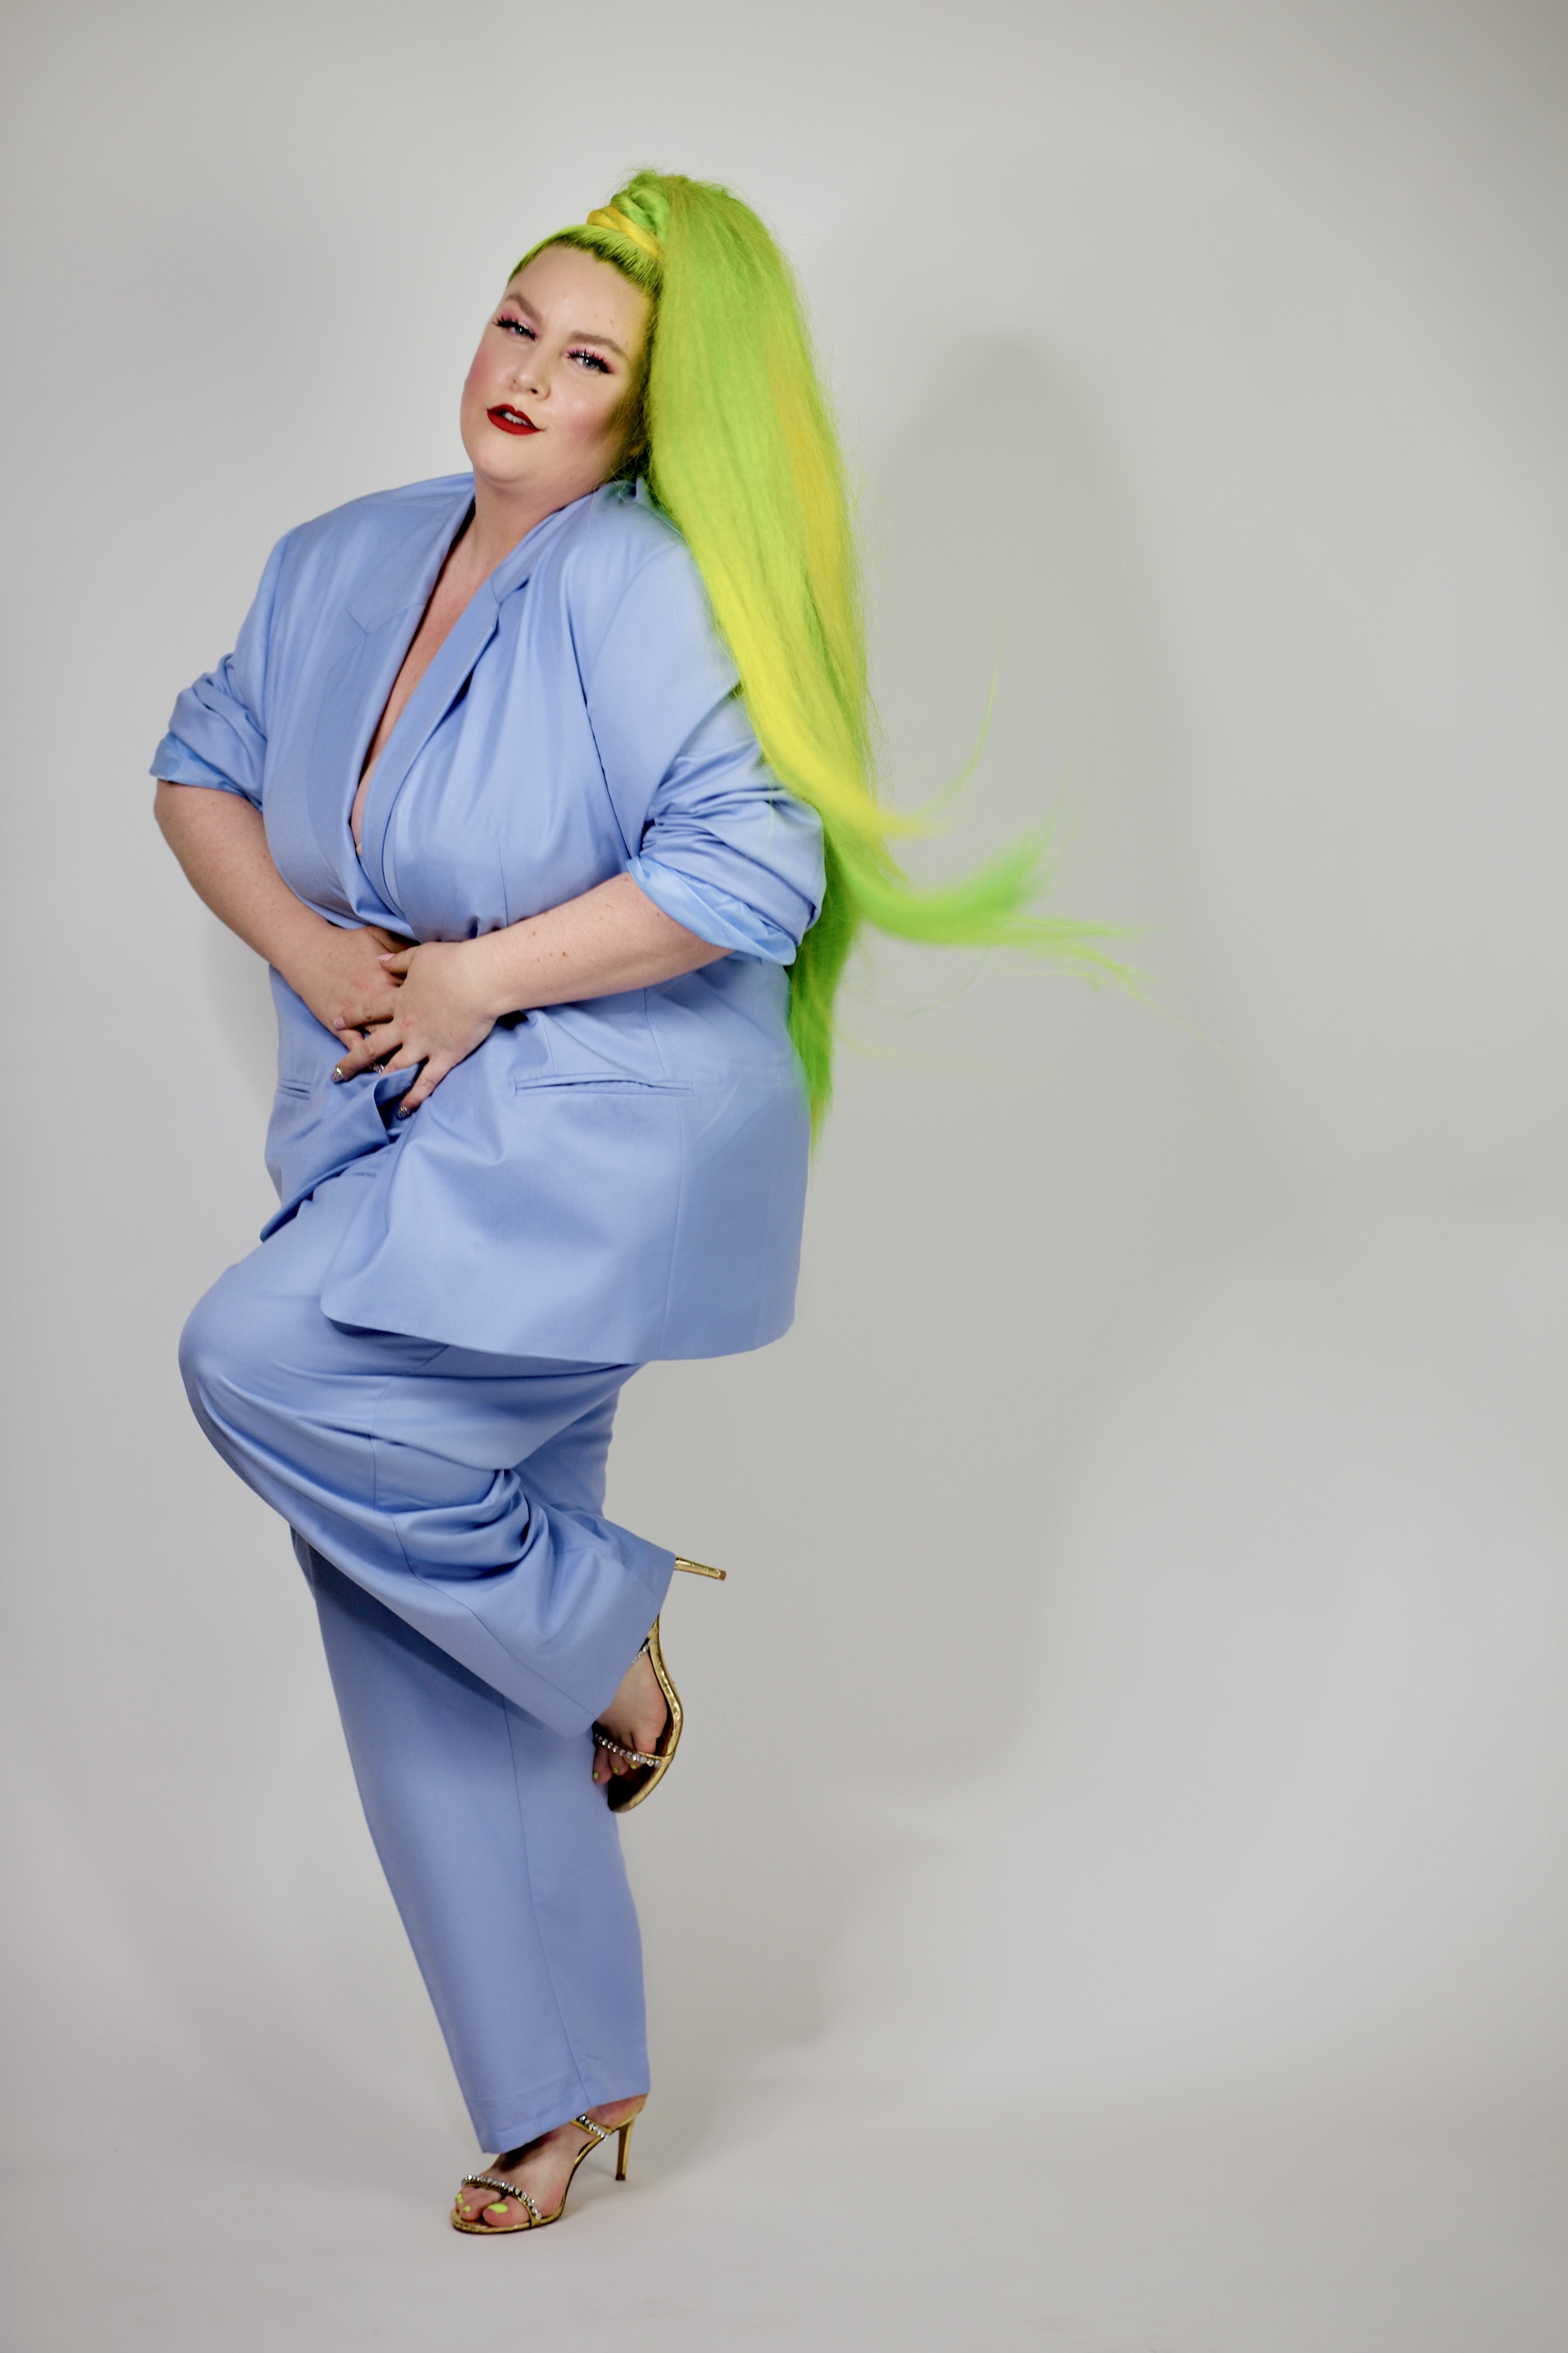 Body Positivity Activist Margie Plus on Her Signature Neon Hair - FASHION  Magazine